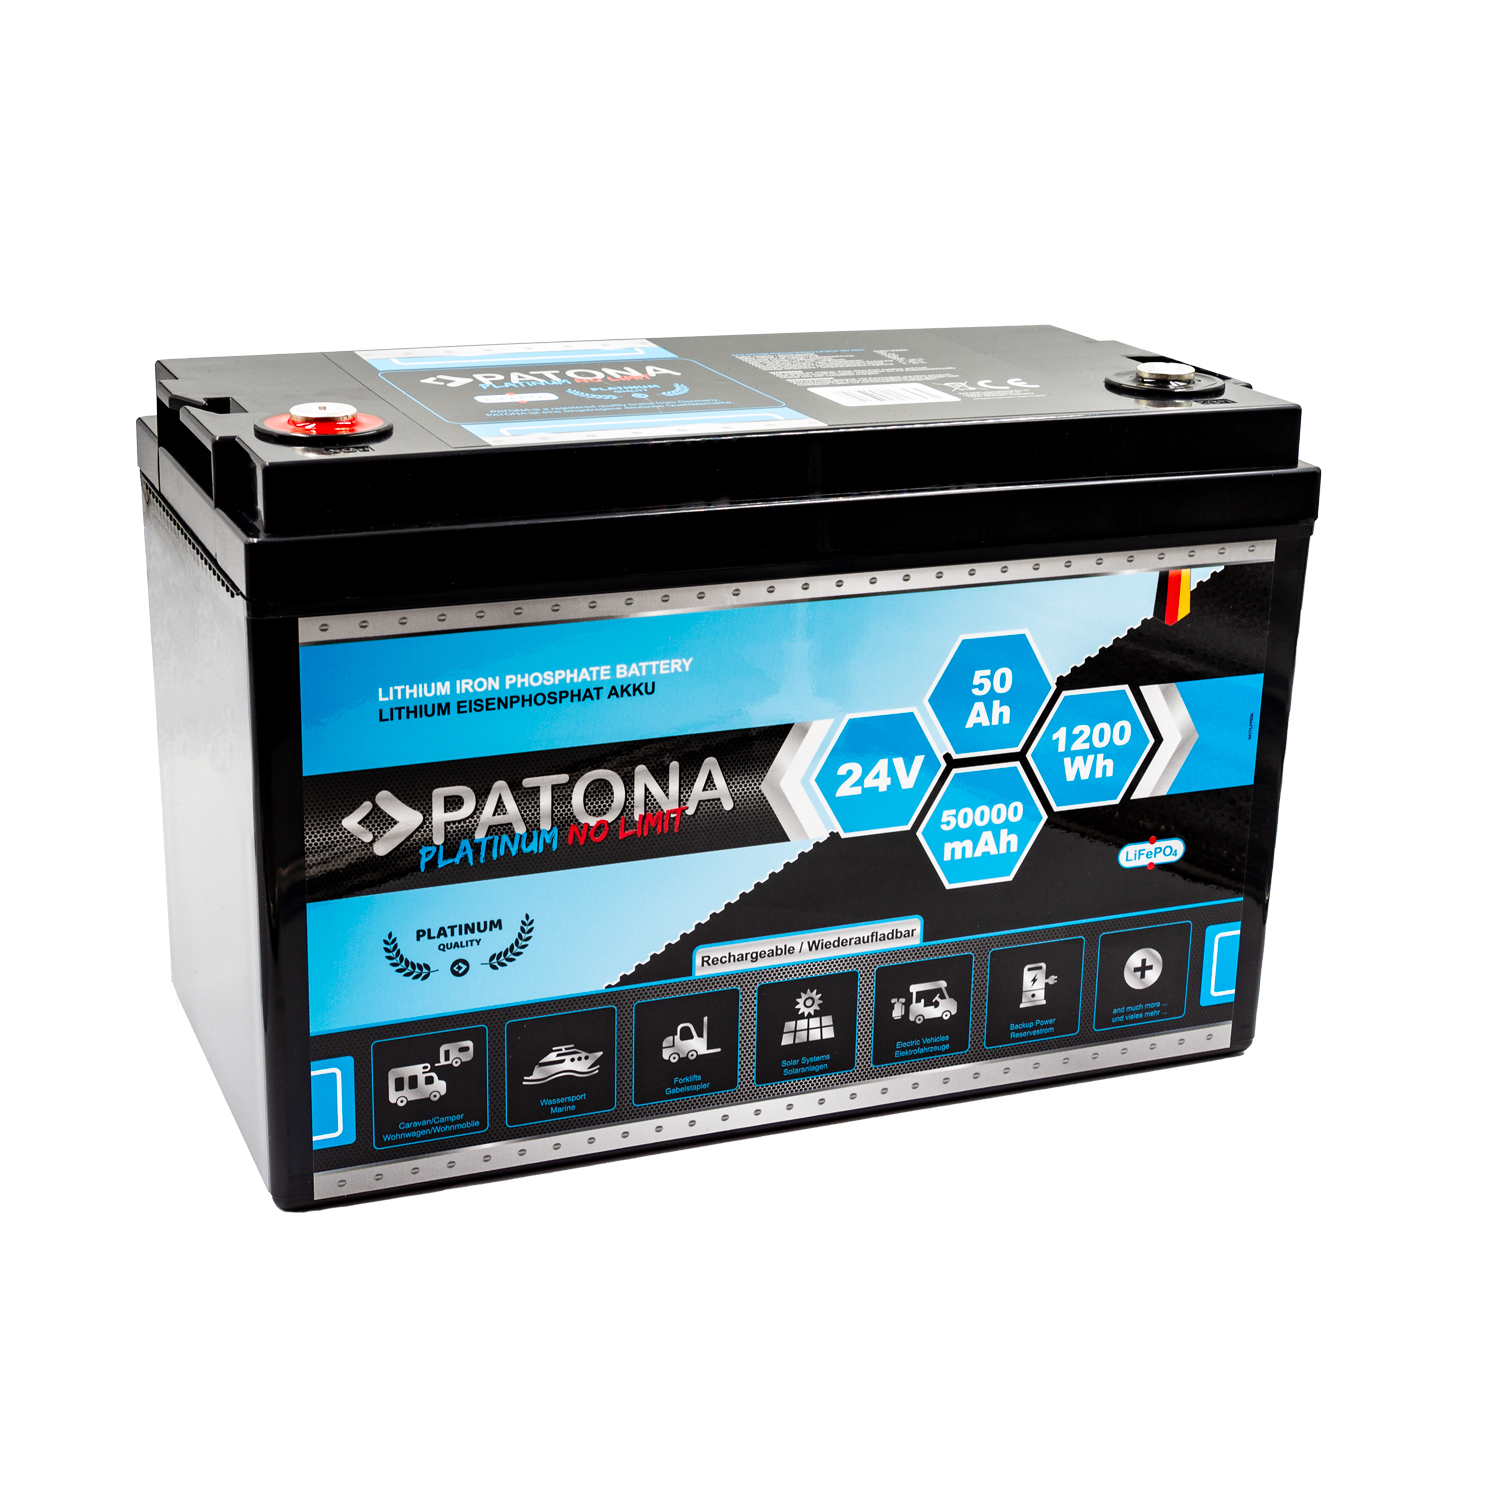 PATONA Platinum LiFePO4 Battery 24V